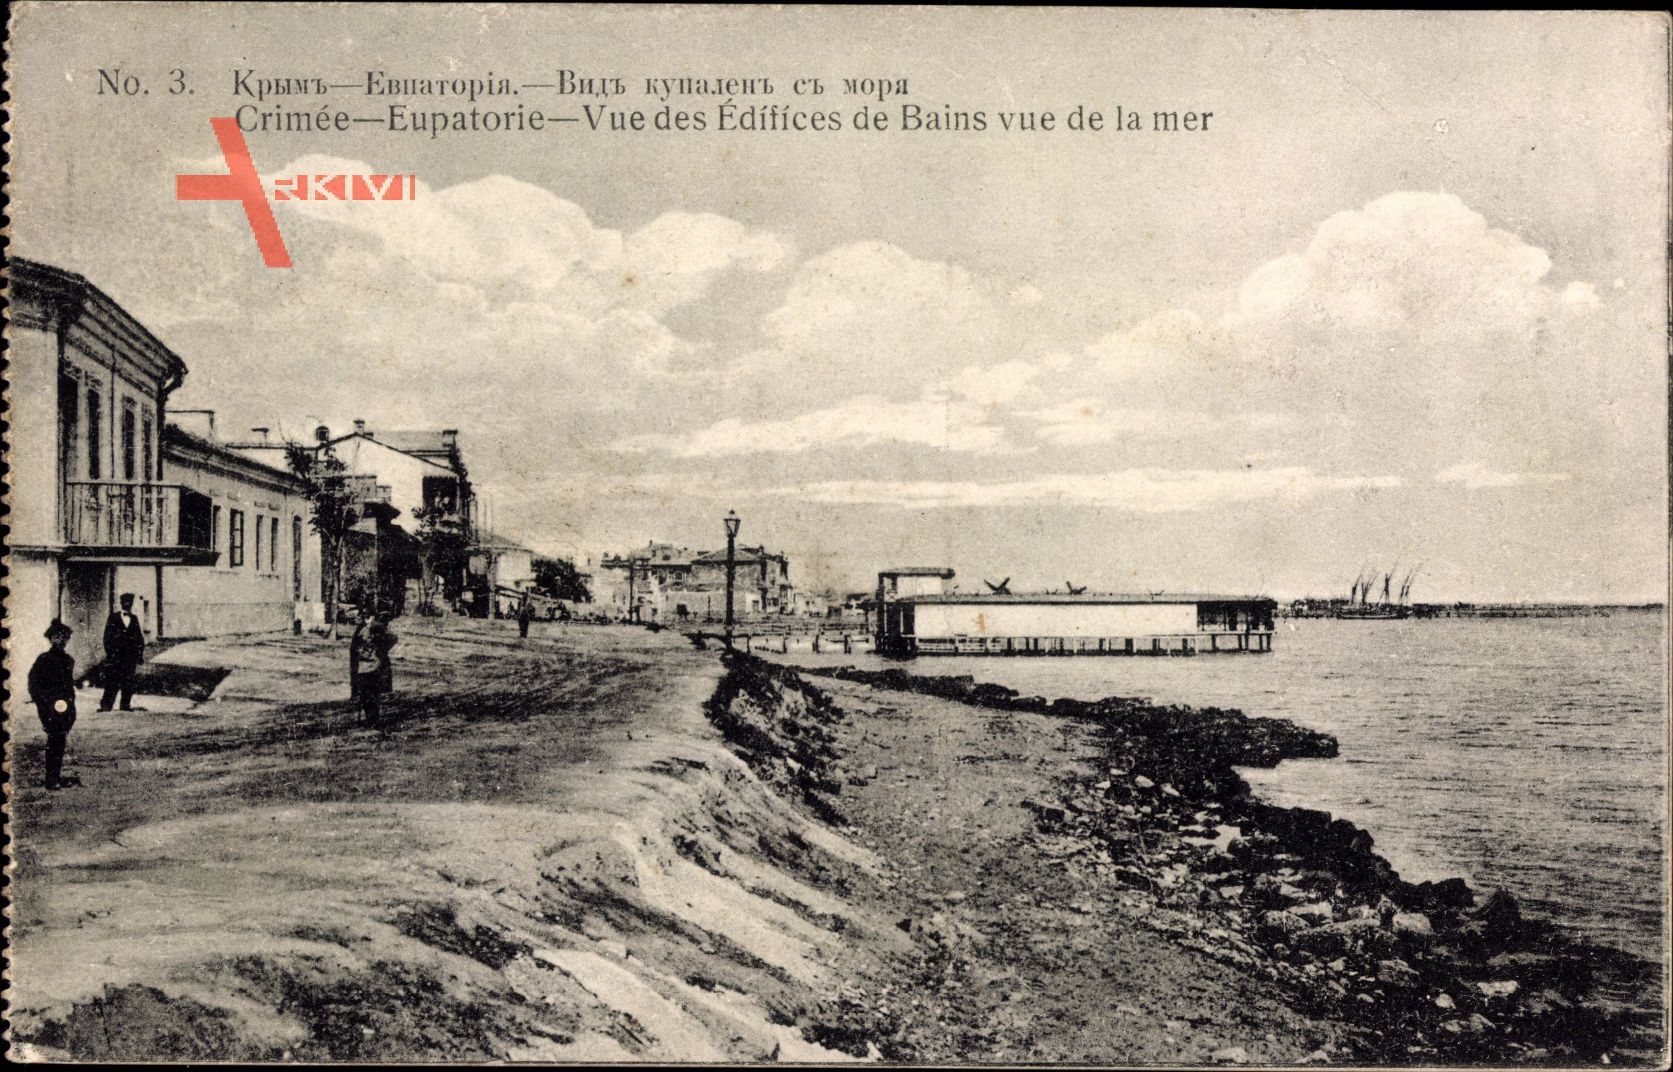 Jewpatorija Krim Ukraine, Vue des Edifices de Bains vue de la mer